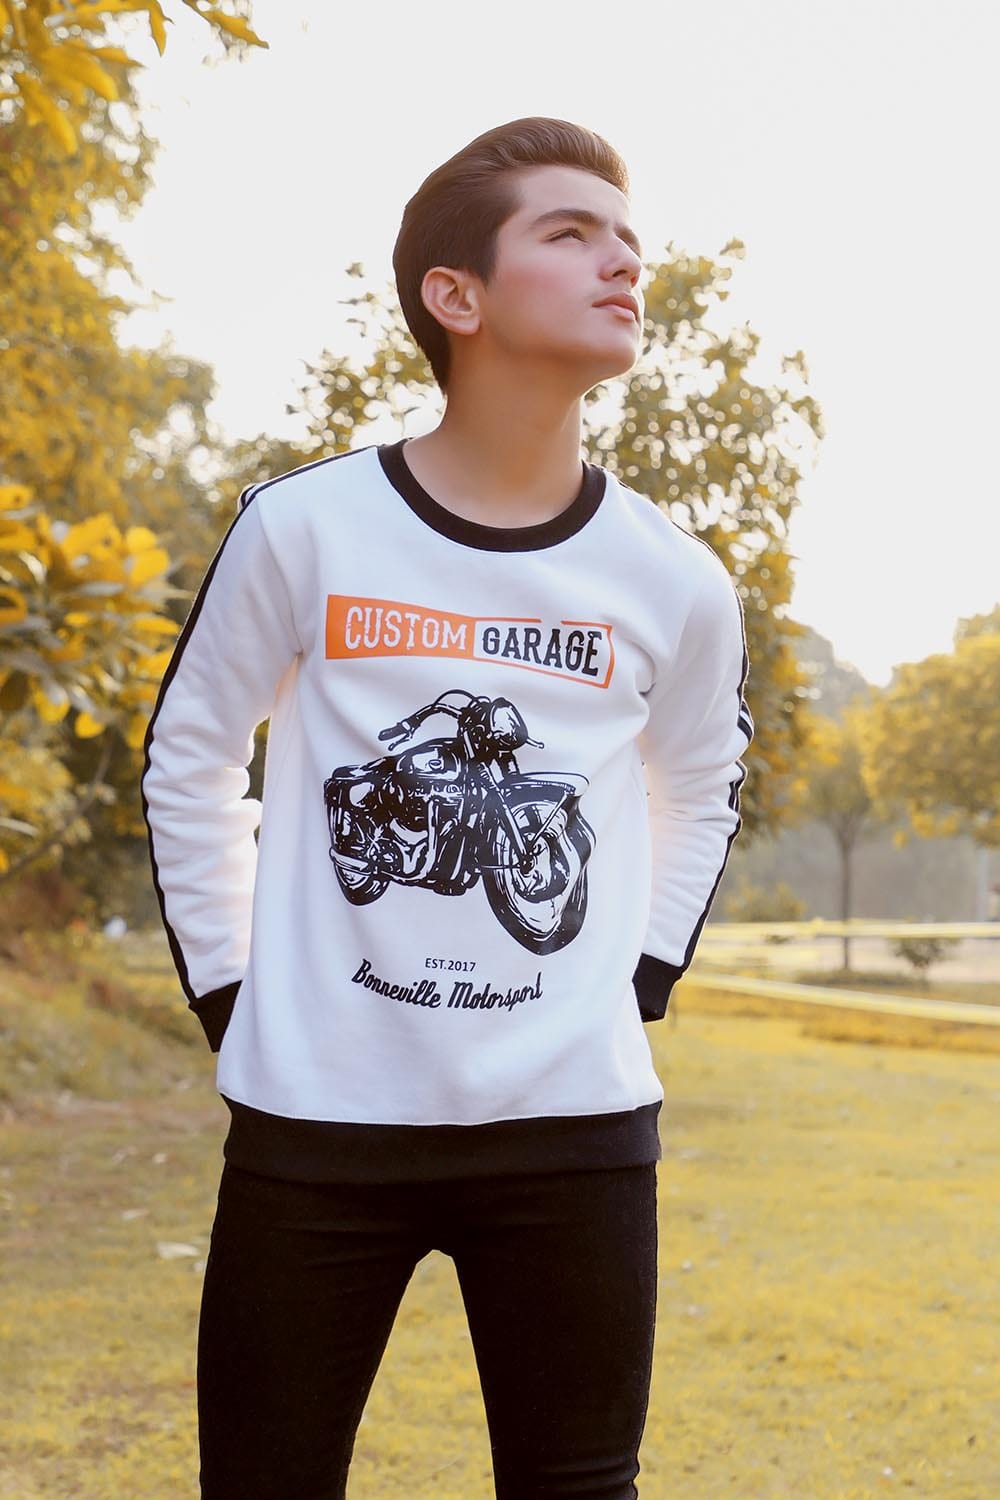 Hope Not Out by Shahid Afridi Boys Knit Sweat Shirt Biker Sweatshirt